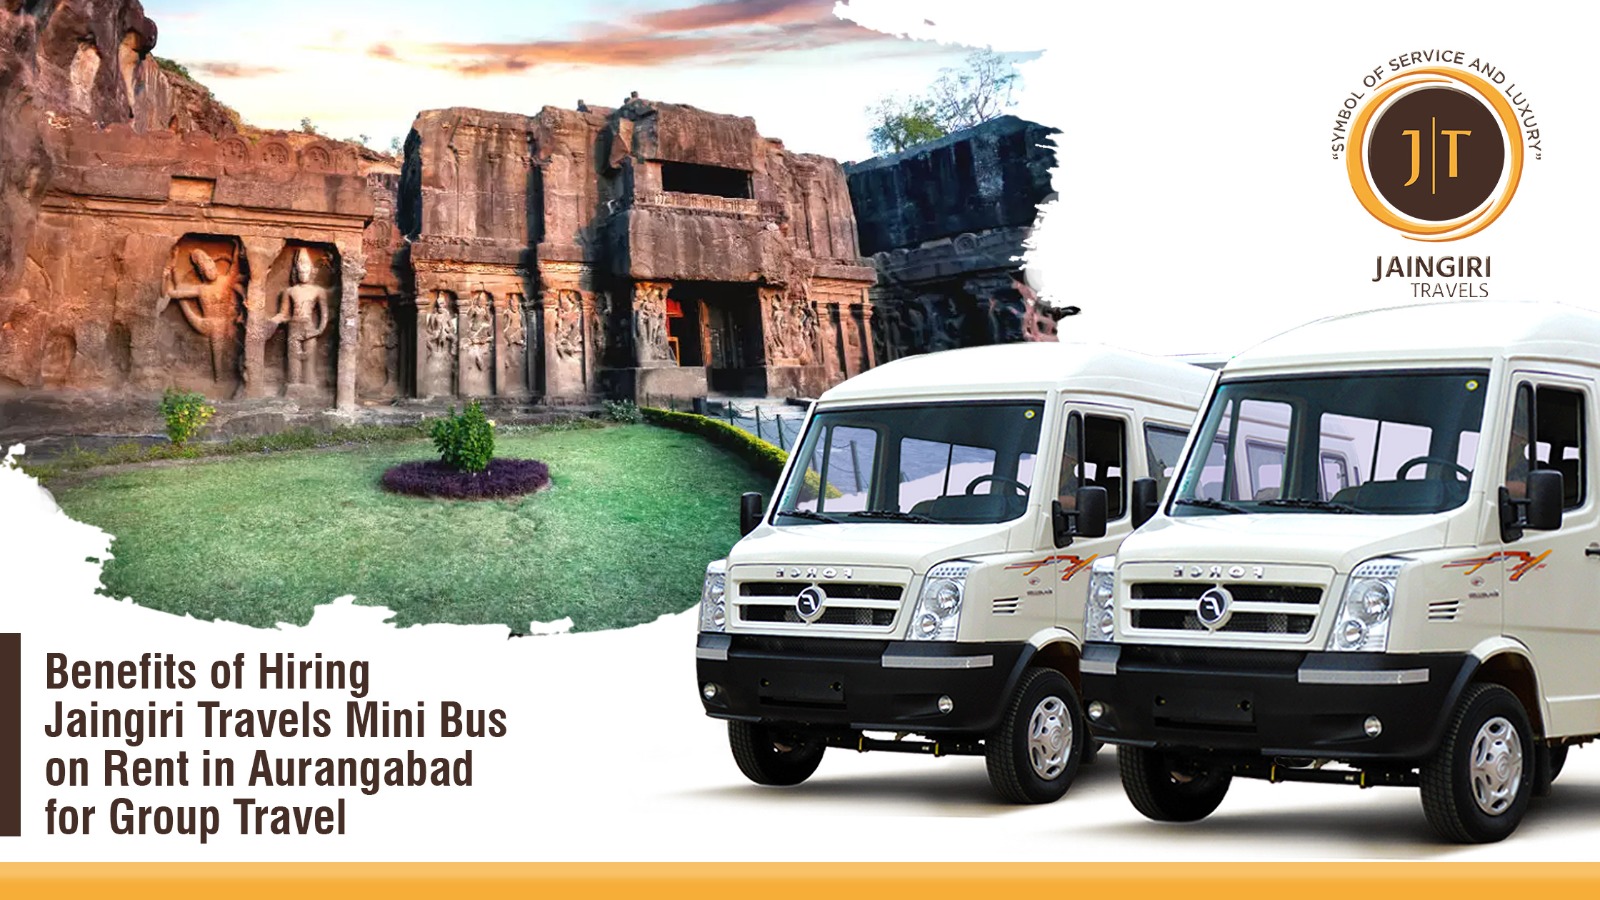 Mini bus Rental in Aurangabad